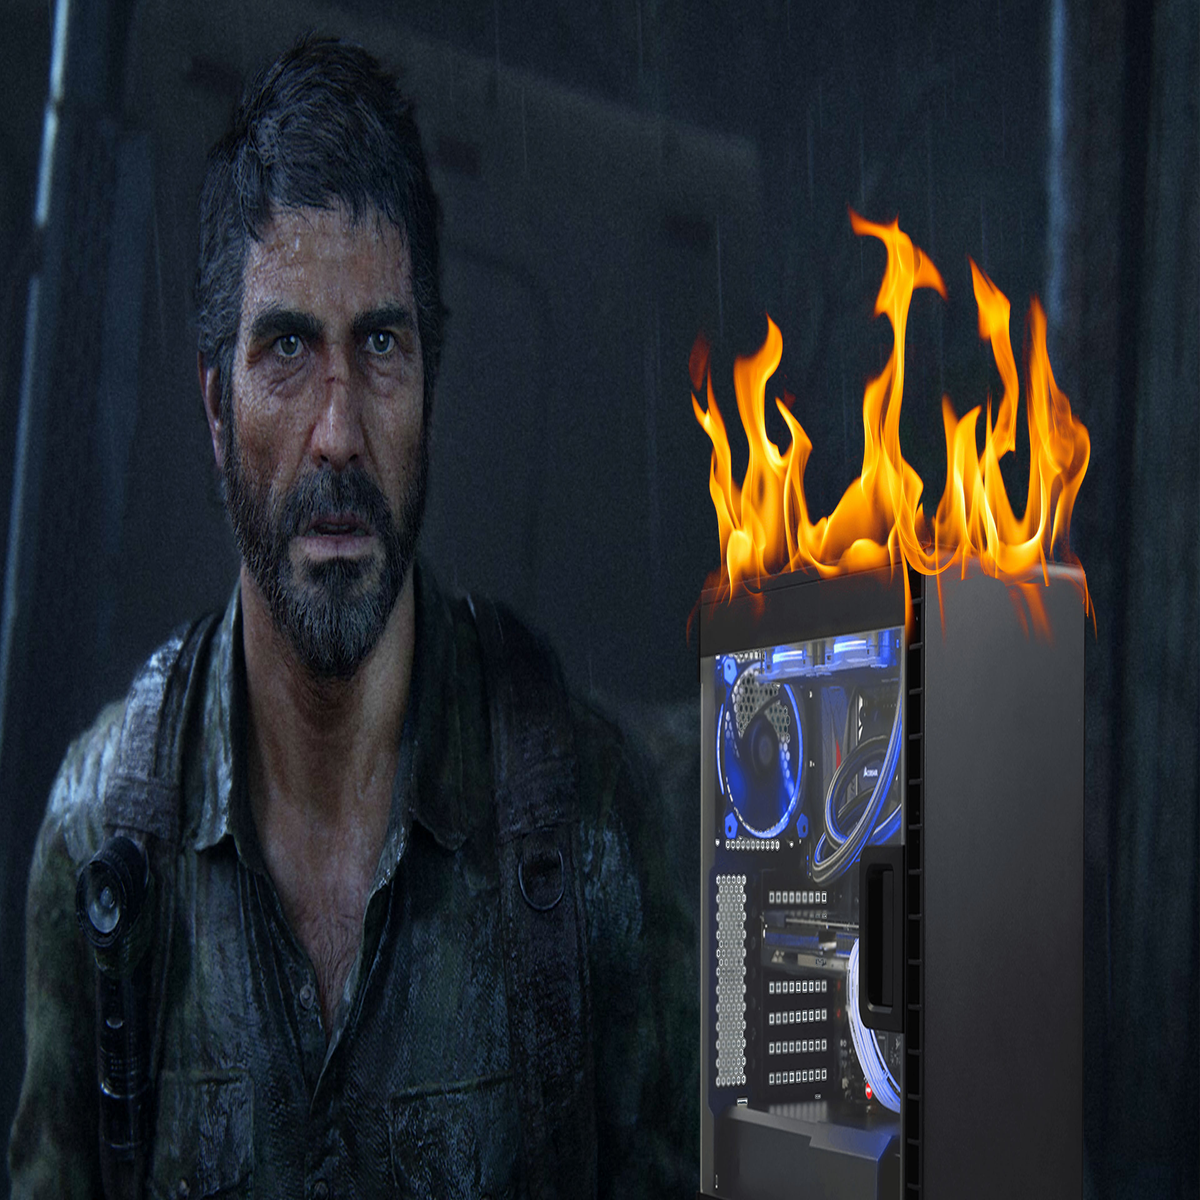 The Last of Us Part I's PC port receives massive backlash